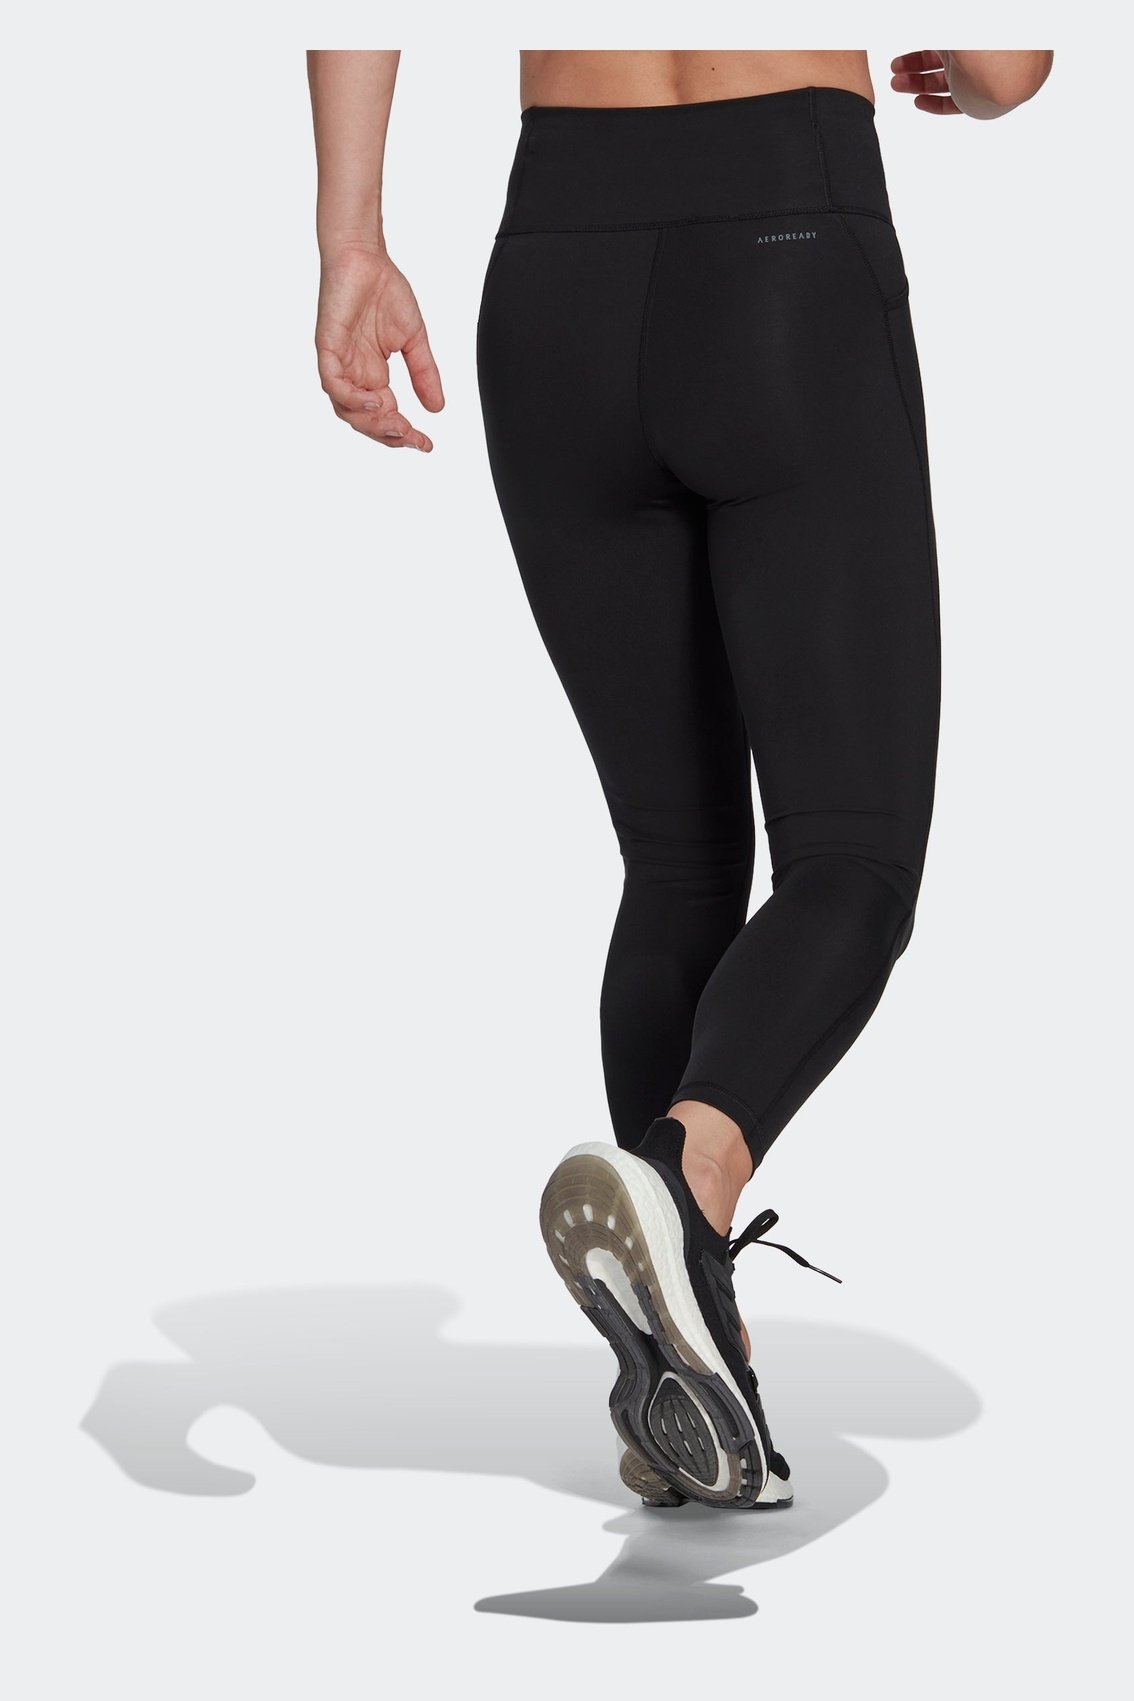 ADIDAS - טייץ ספורט לנשים 7/8 RUNNING ESSENTIALS בצבע שחור - MASHBIR//365